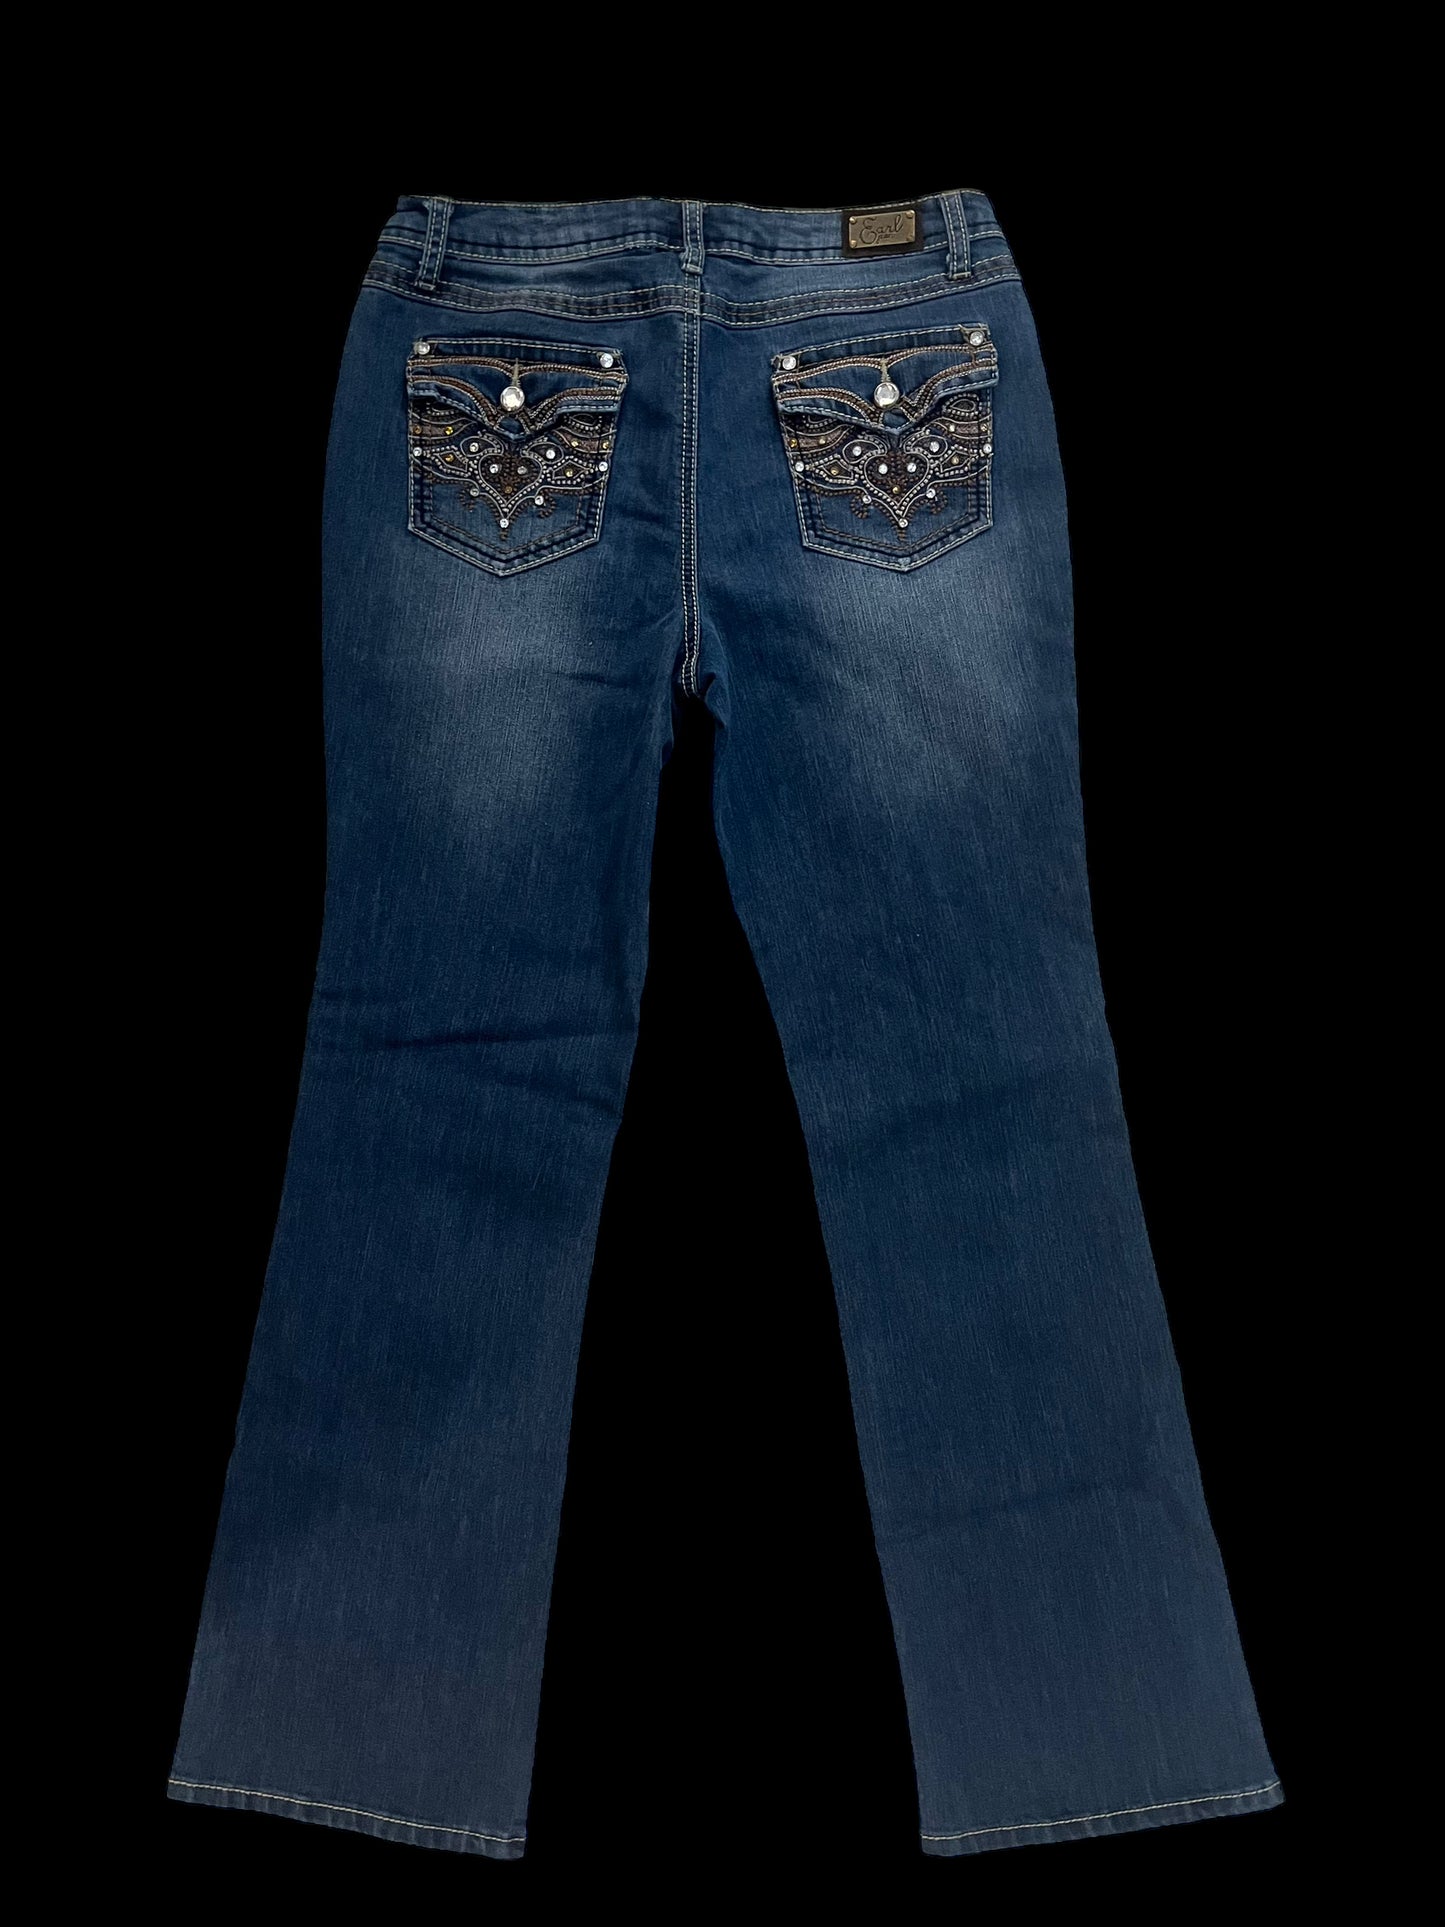 Embellished bootcut jeans